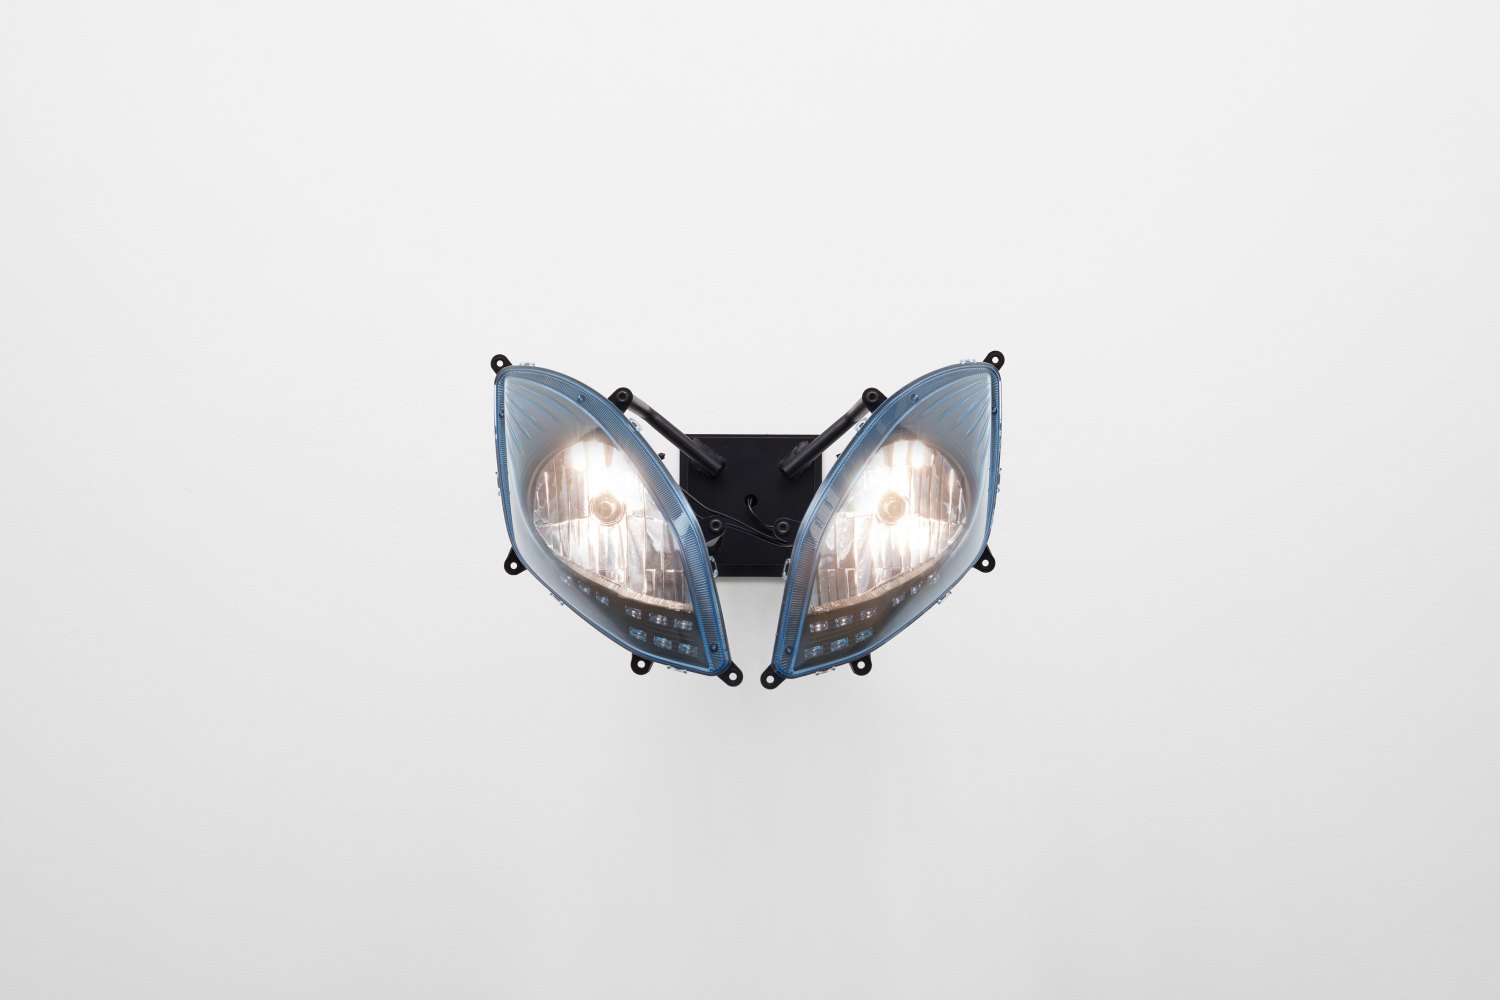 Yngve Holen Hater headlight, 2015  scooter headlight, powder coated steel, 29 x 46 x 66 cm  